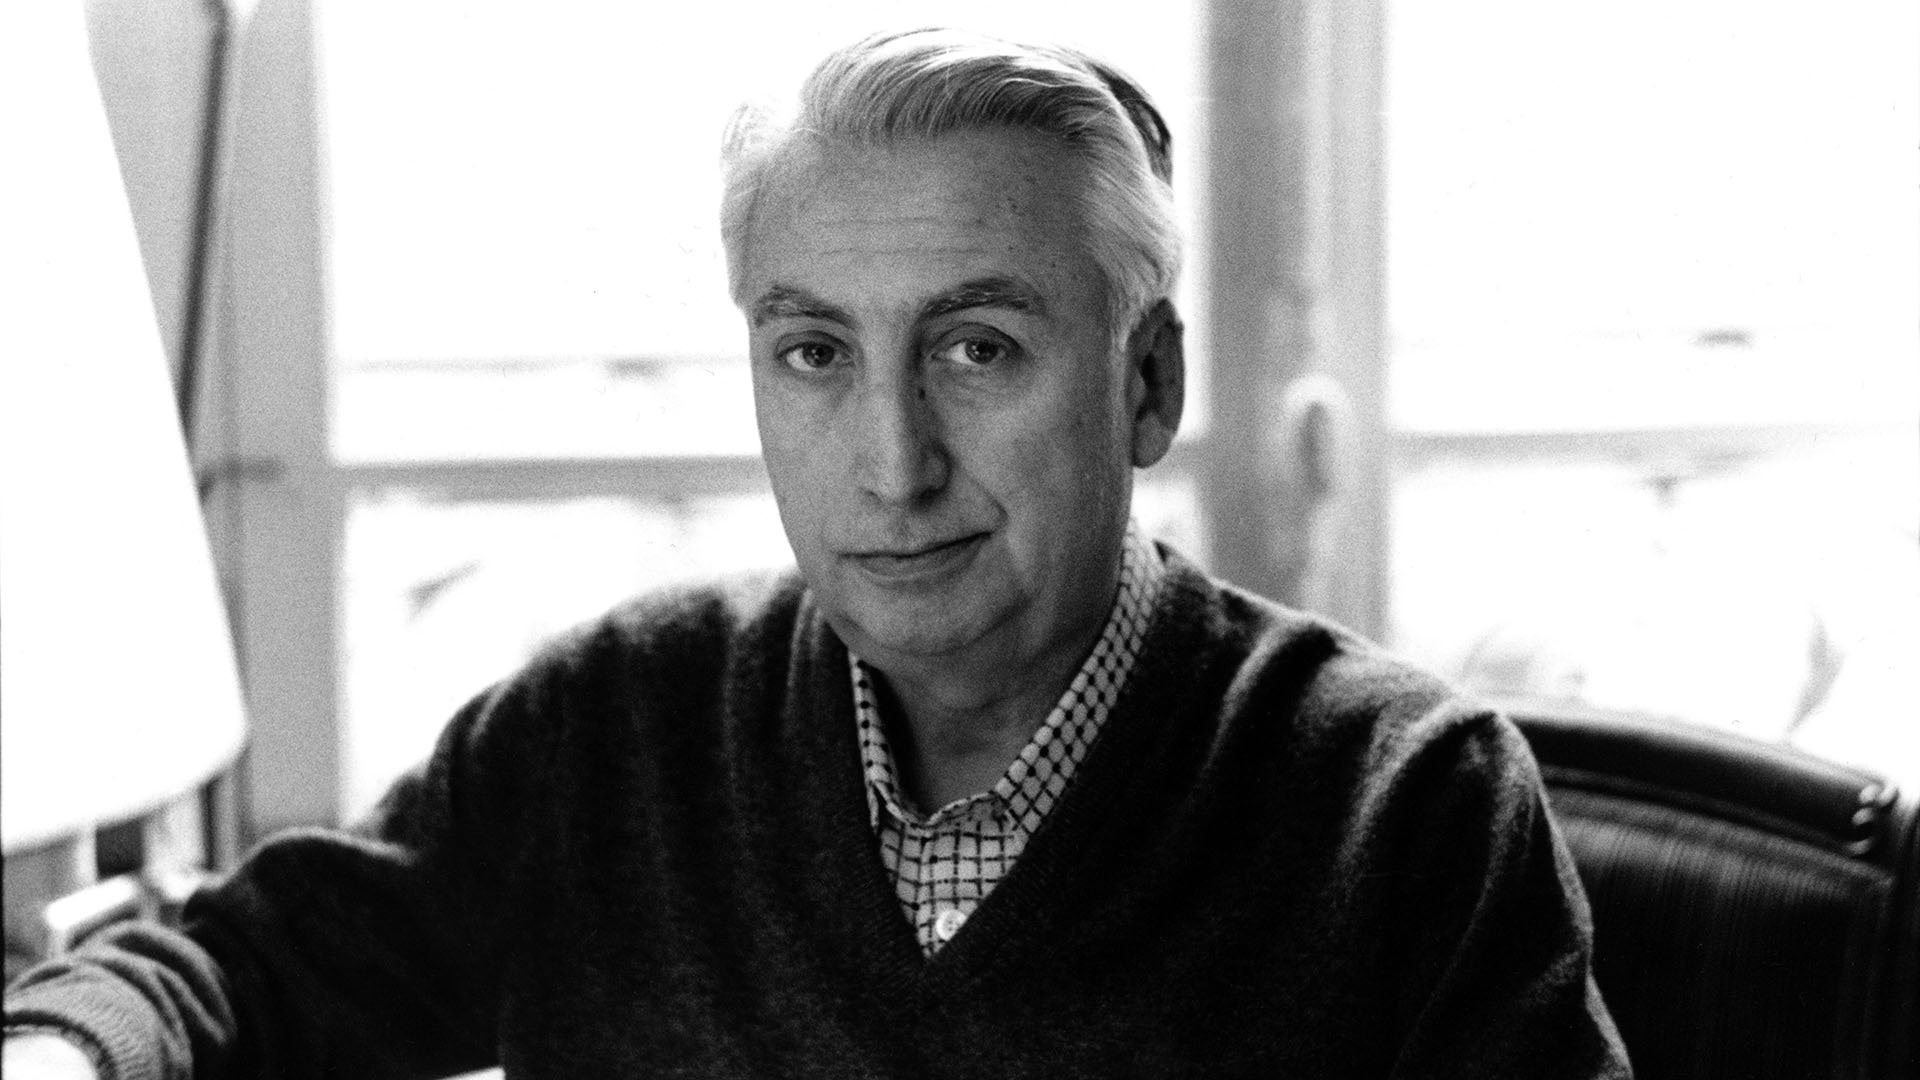 El lingüista francés Roland Barthes en 1979 (Ulf Andersen/Getty Images)